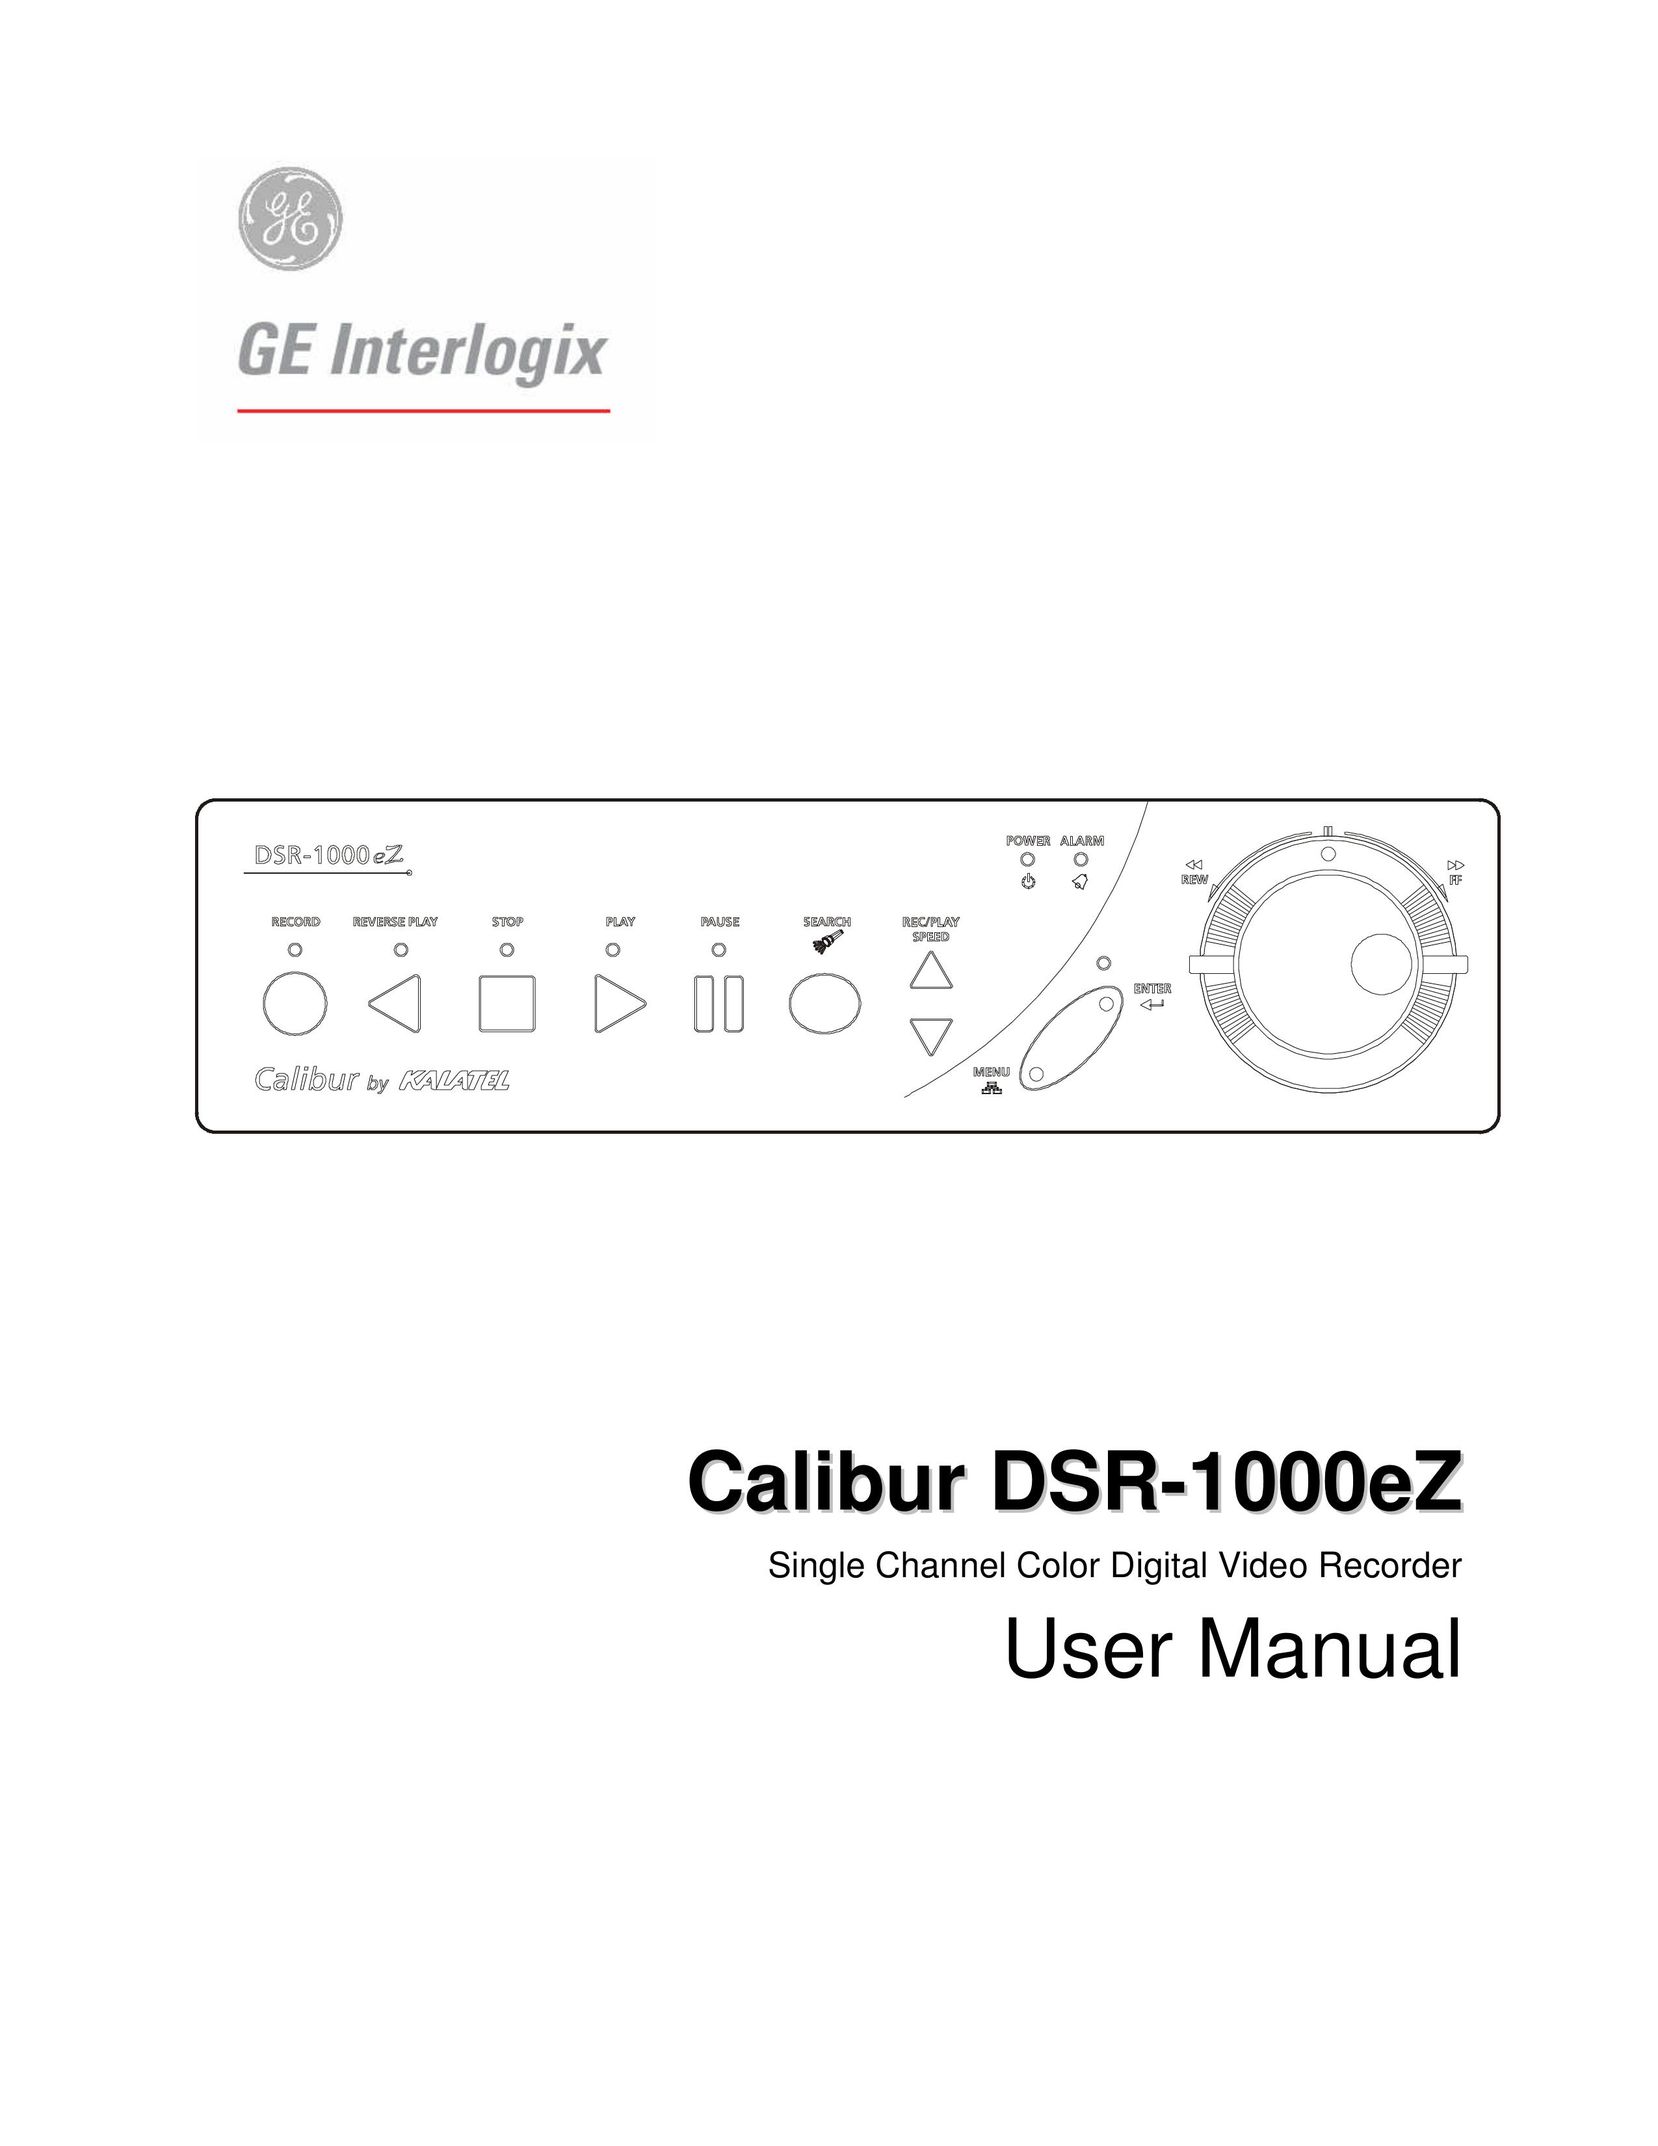 GE DSR-1000eZ DVR User Manual